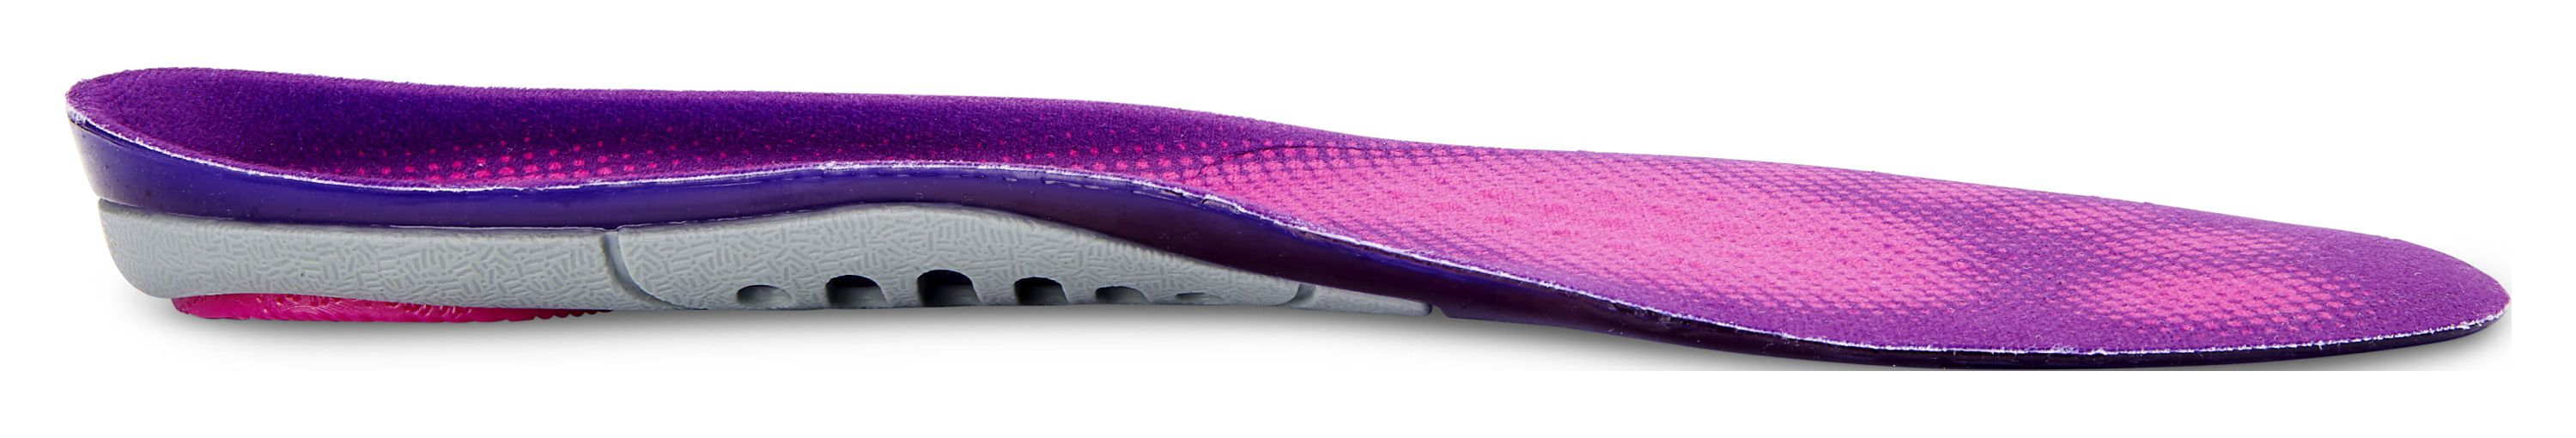 SOFCOMFORT Custom Gel Insole Purple One Size - image 4 of 9